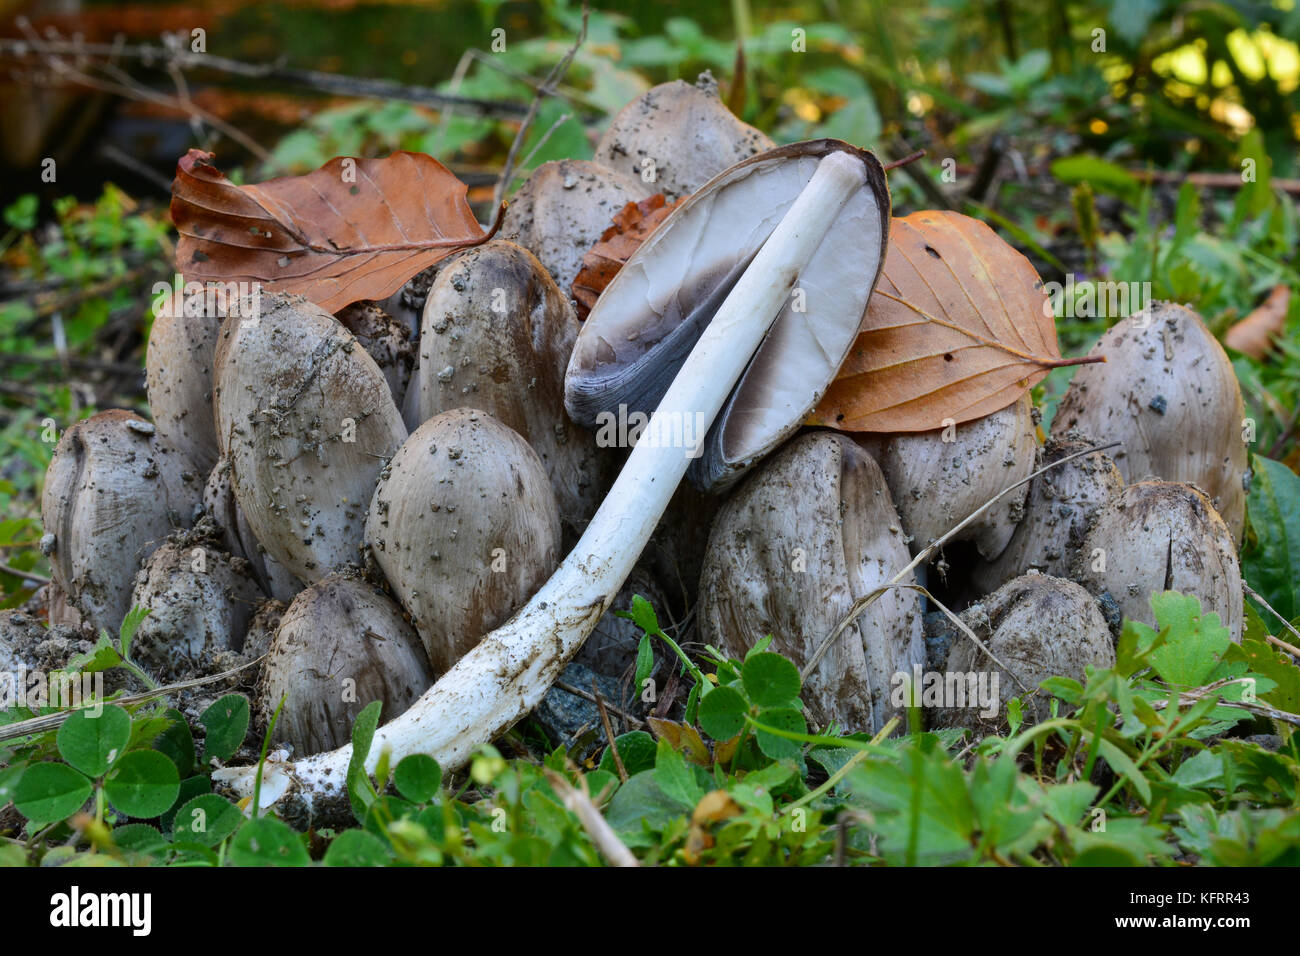 Clump of Coprinus atramentarius or Common Inkcap, or Tippler's bane mushrooms  in natural habitat, delicious edible mushroom, but conditionally toxic  Stock Photo